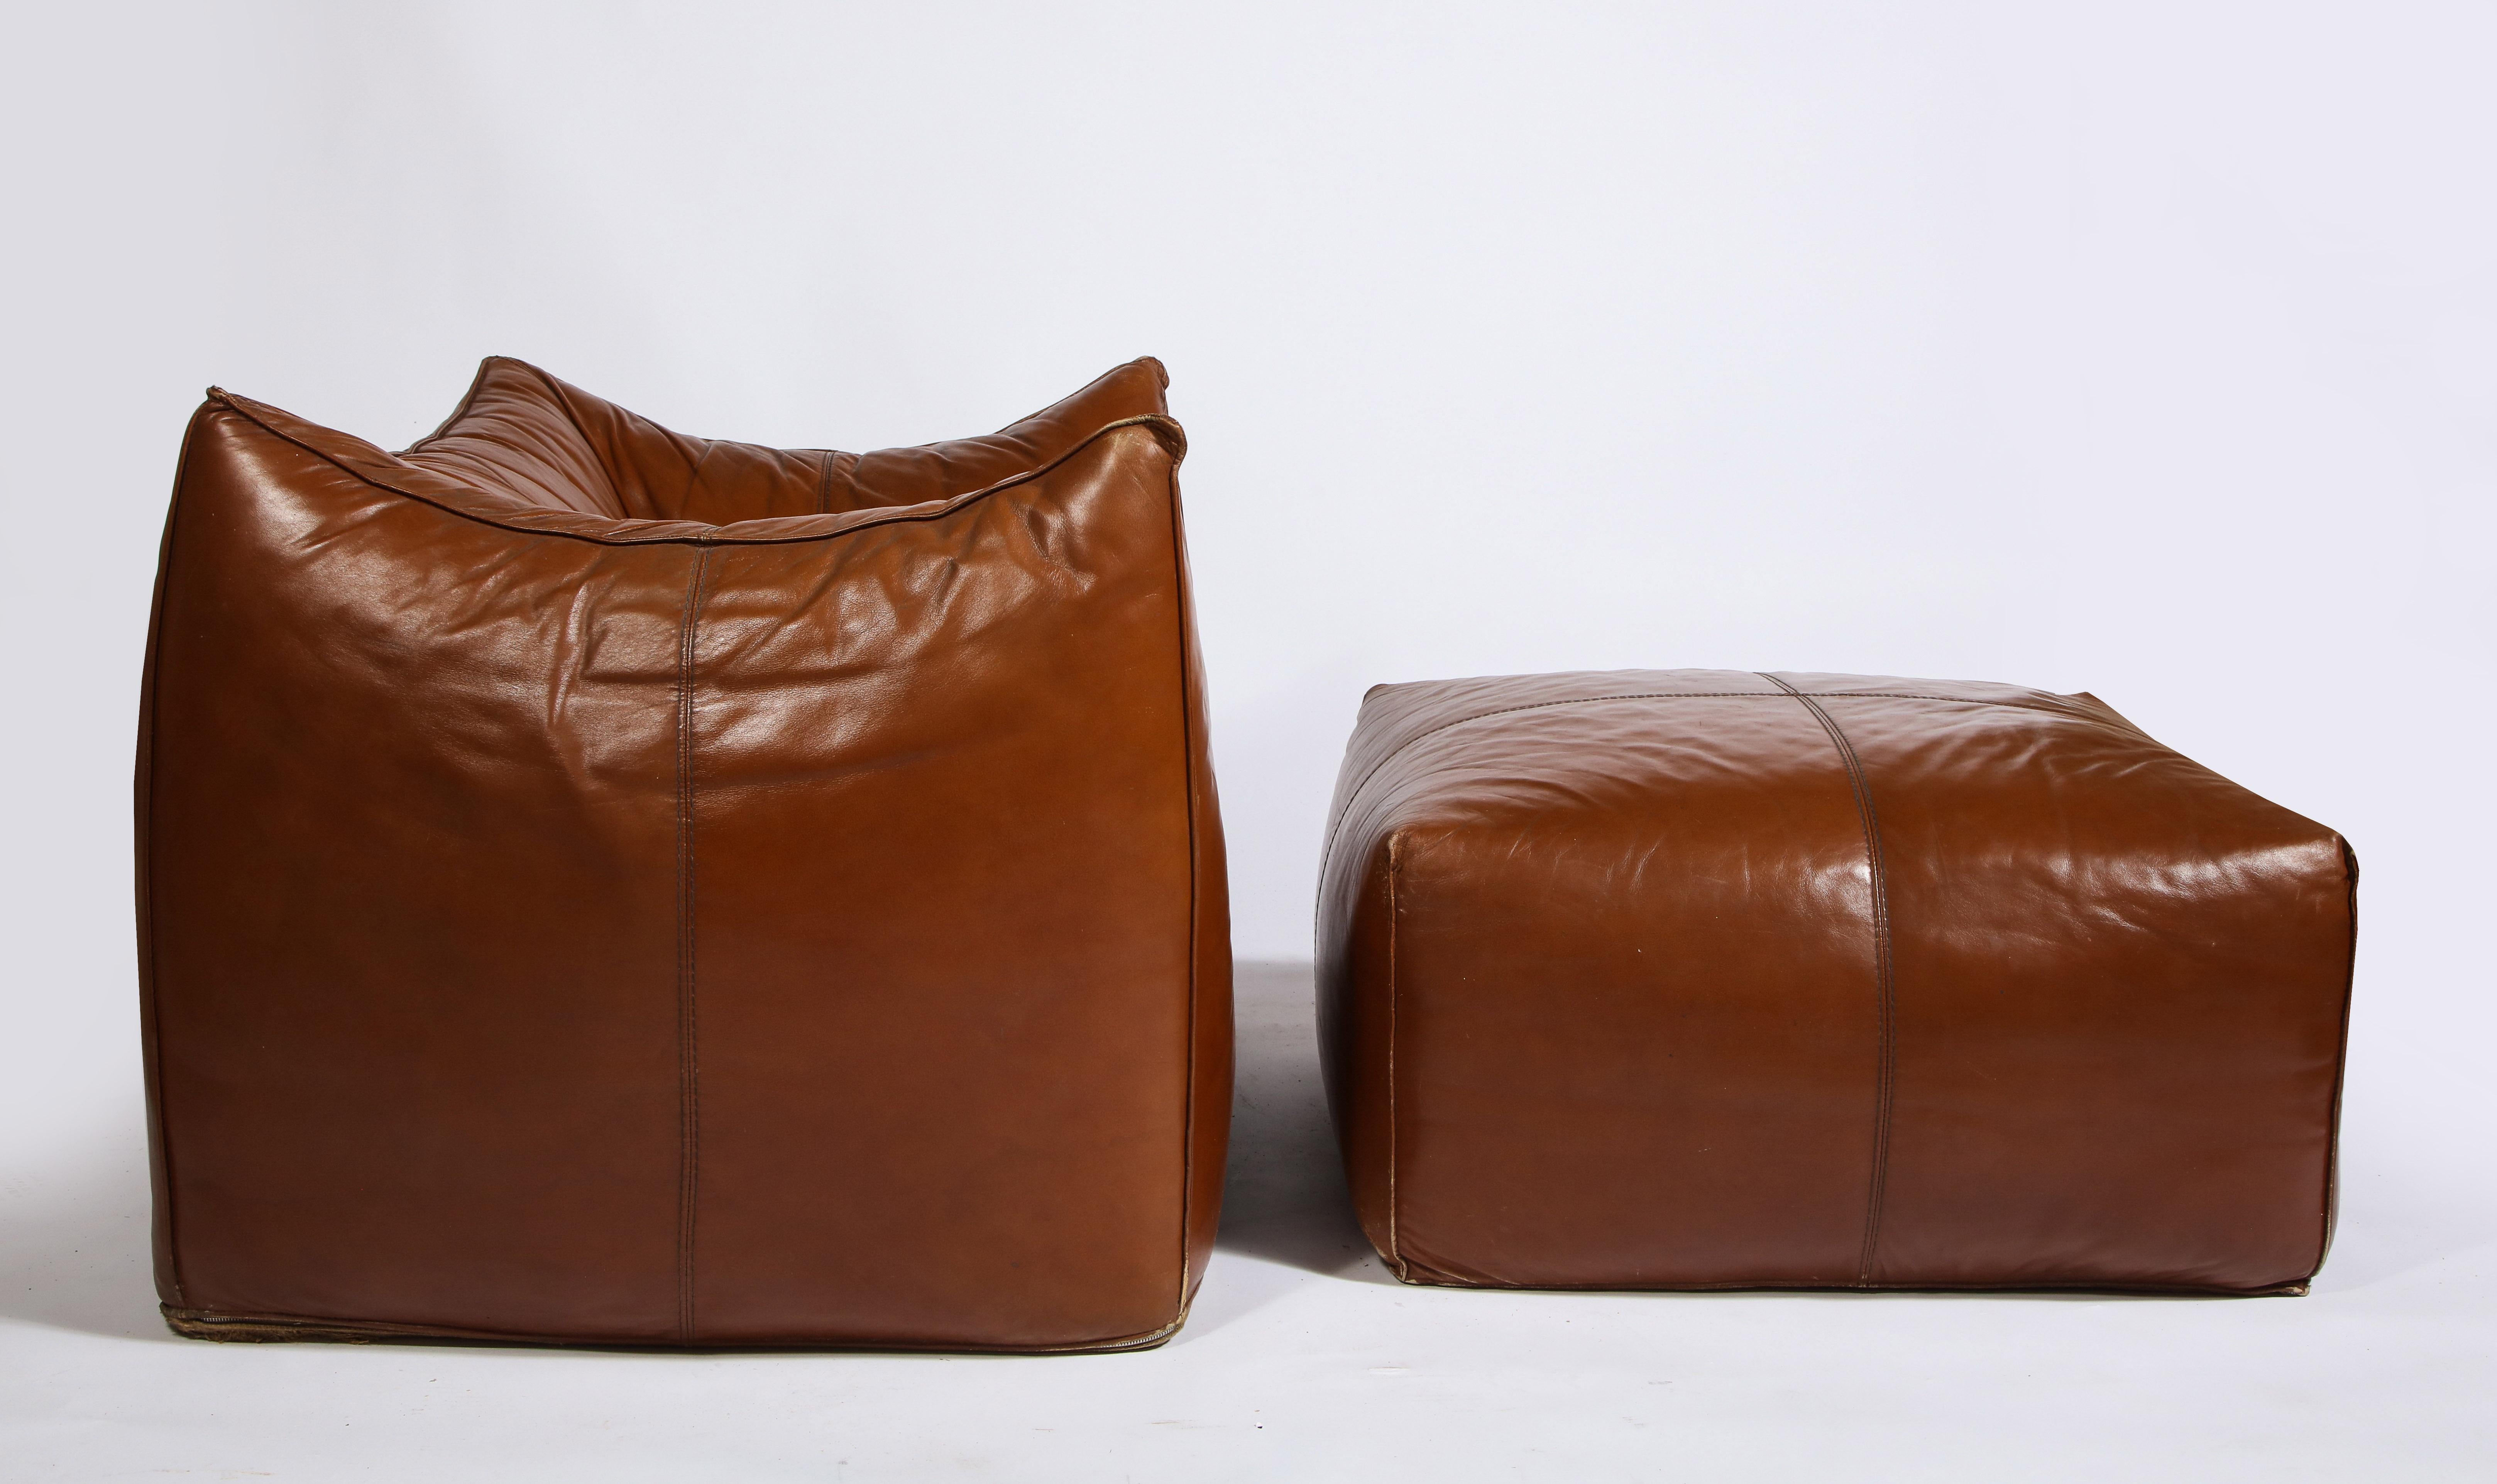 Mario Bellini Cognac Brown Leather Sofa, Chair, Ottoman Le Bambole Set, Italy 1